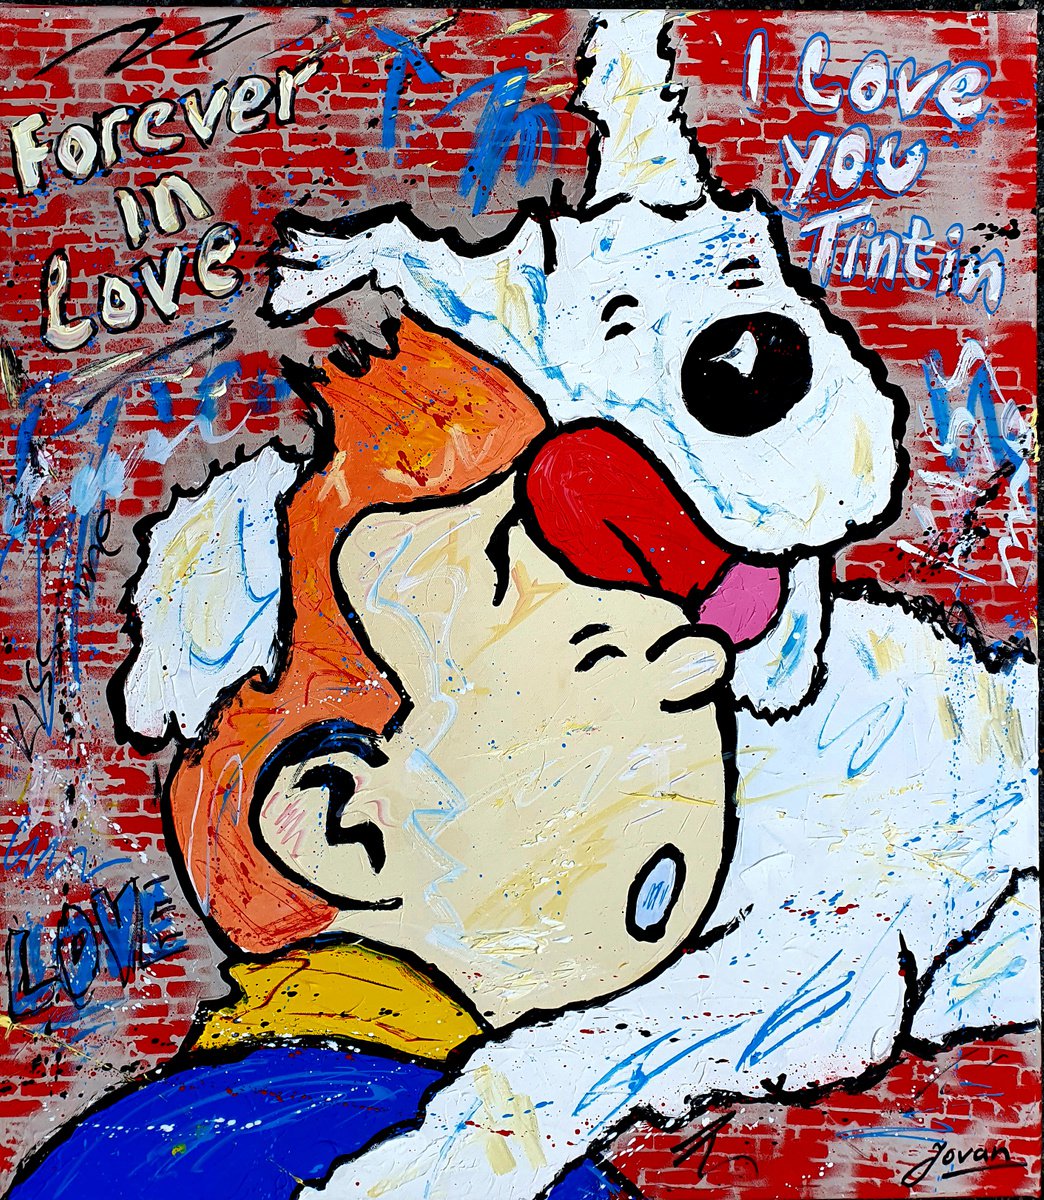 Forever in Love by Jovan Srijemac